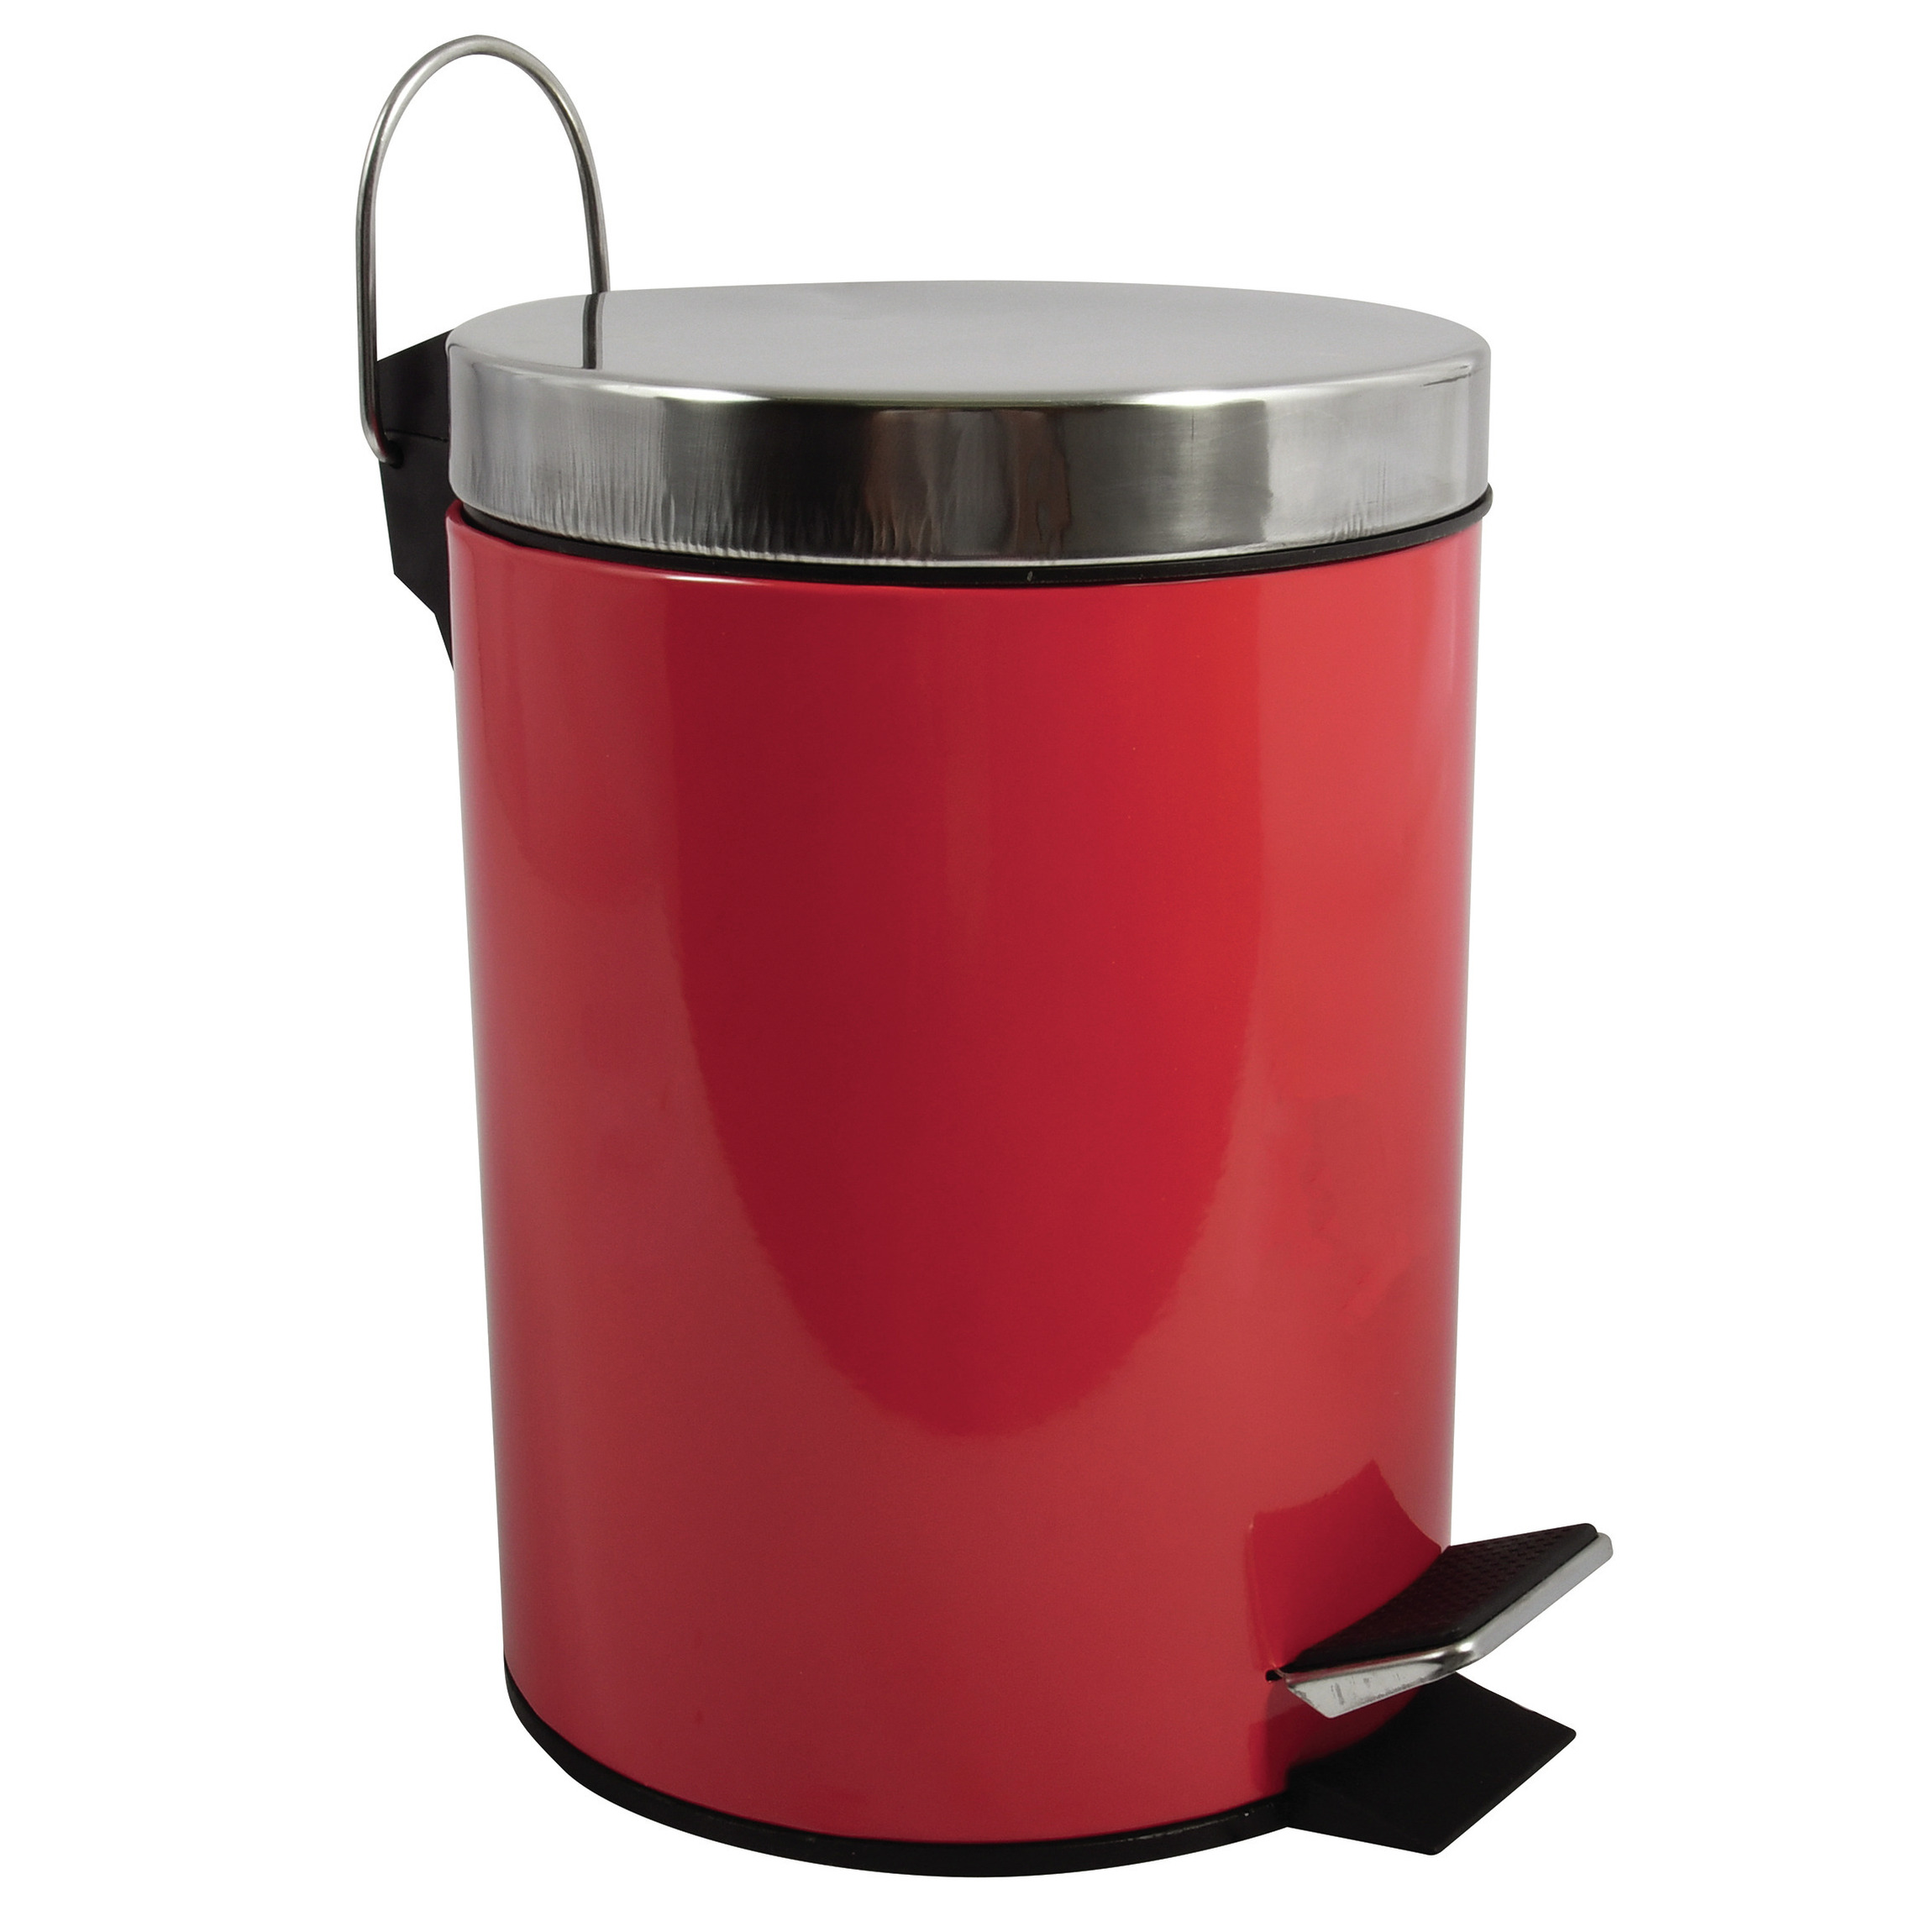 Prullenbak-pedaalemmer metaal rood 5 liter 20 x 28 cm Badkamer-toilet